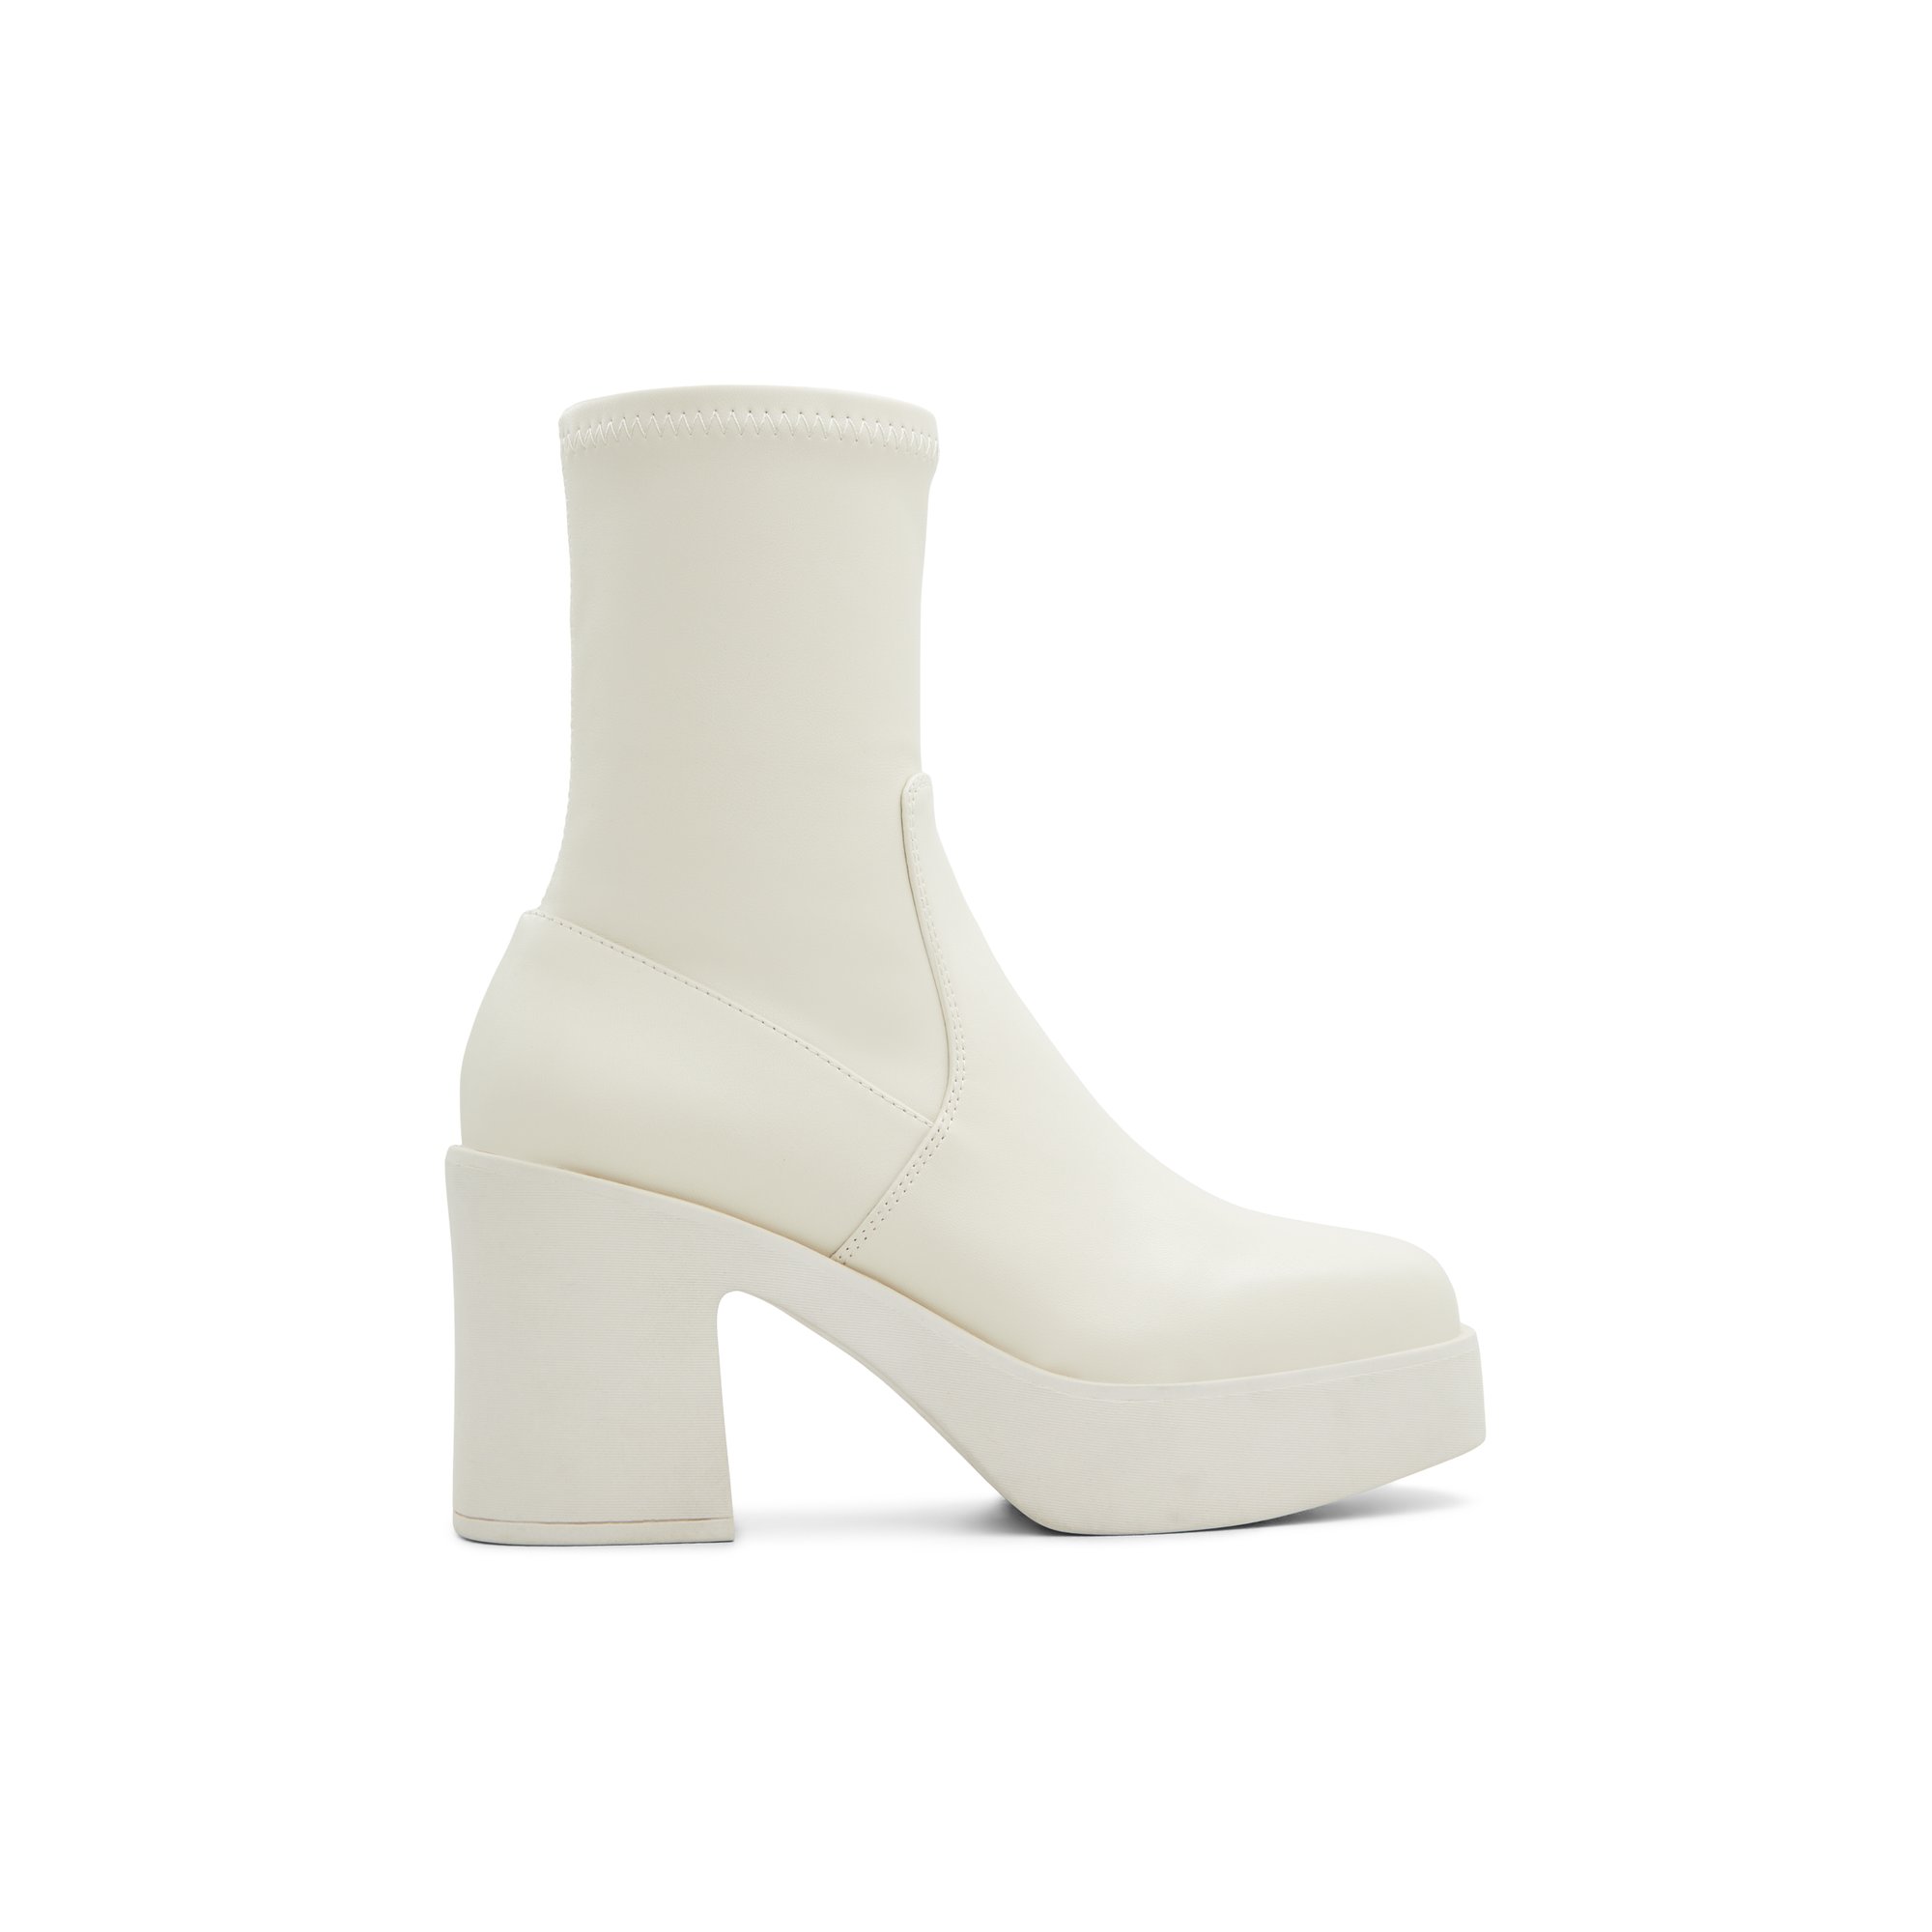 ALDO Upstep - Women's Ankle Boot - White